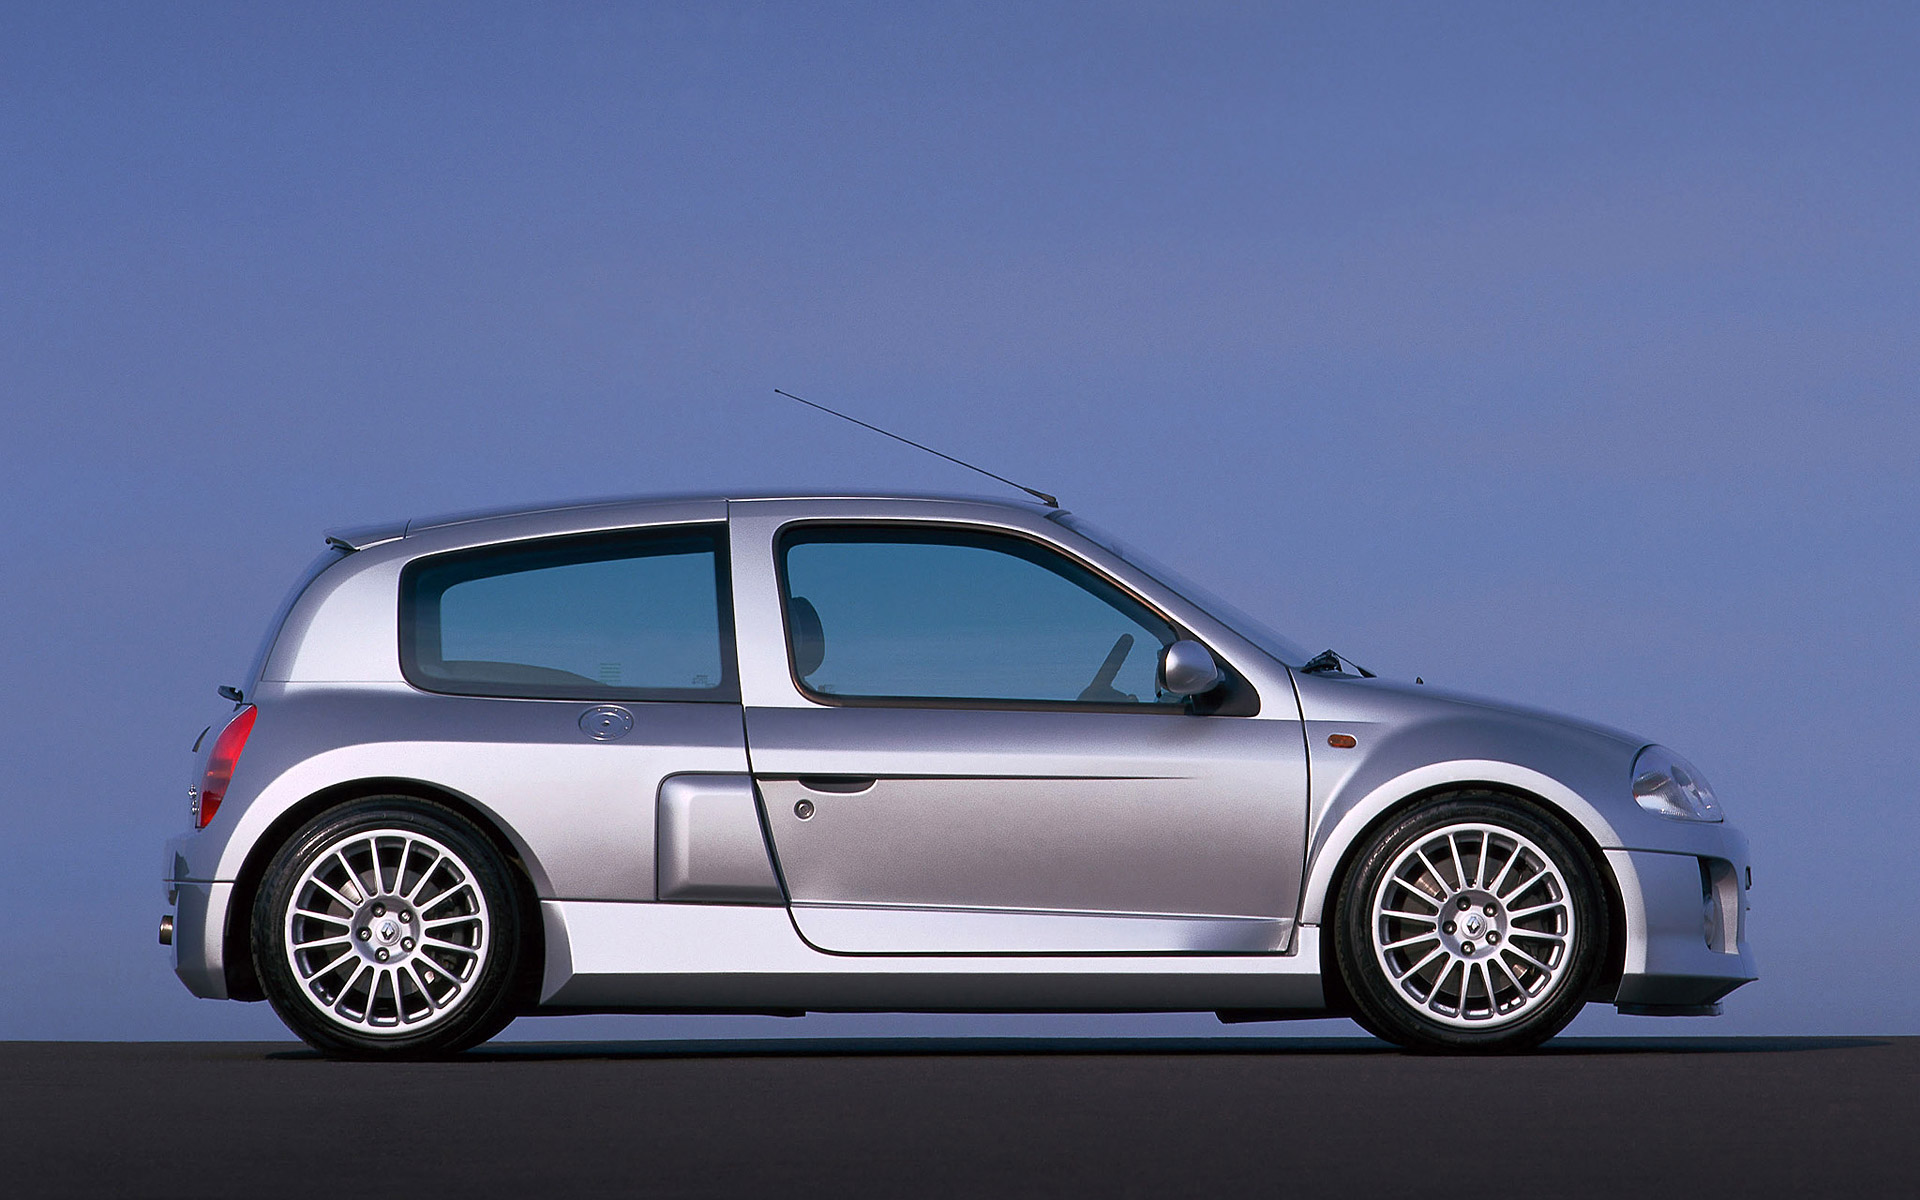  2000 Renault Clio V6 Wallpaper.